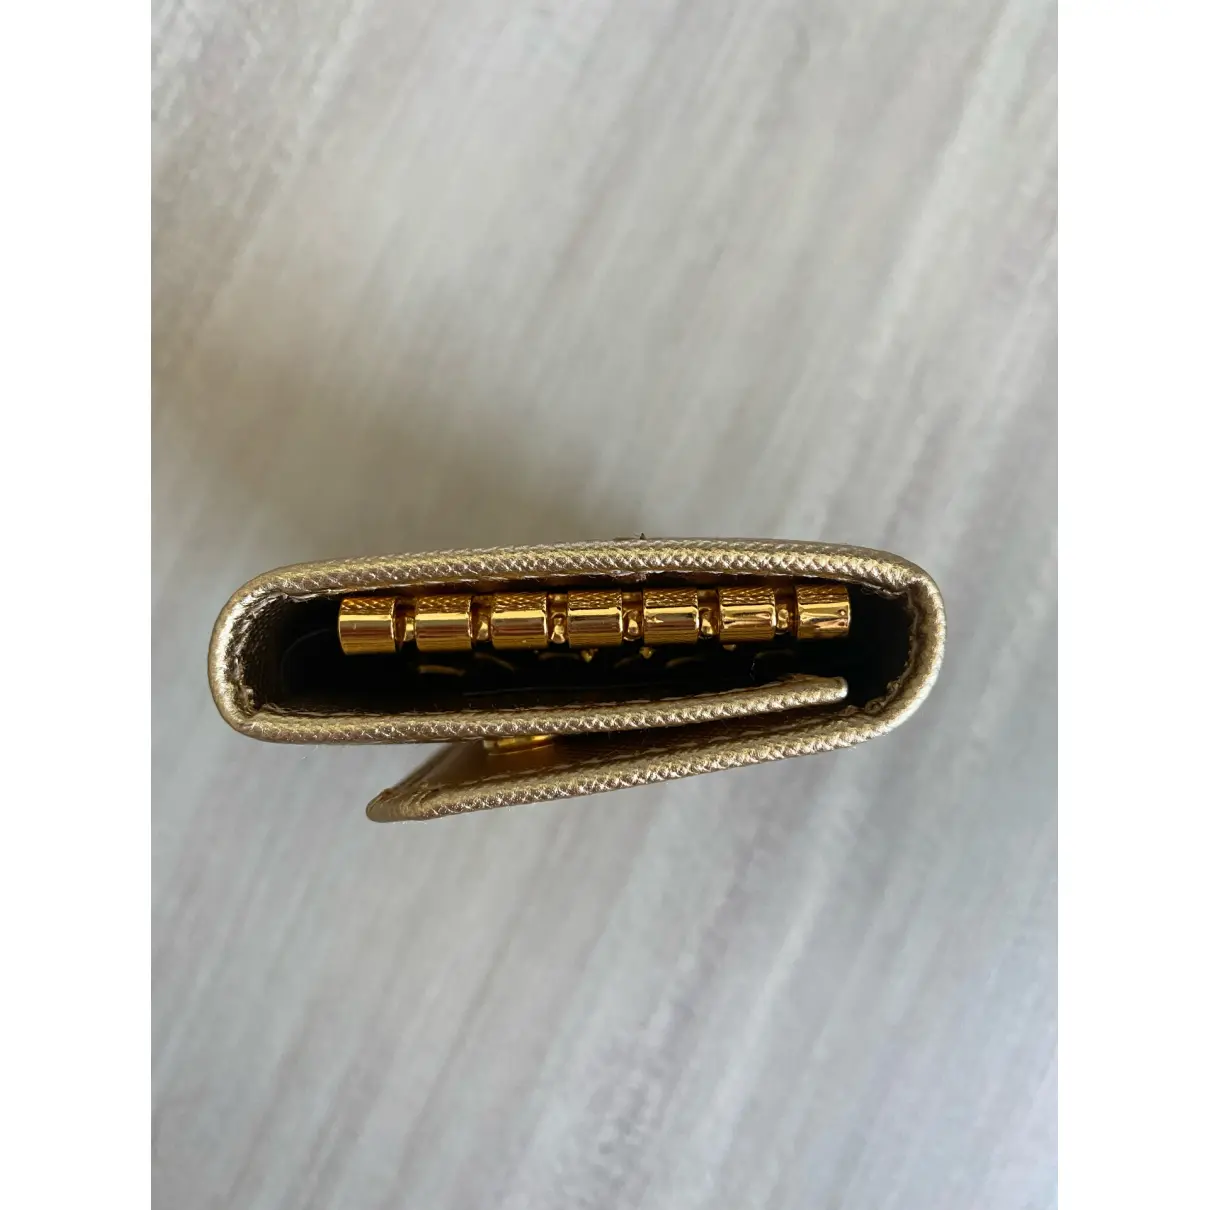 Buy Prada Leather key ring online